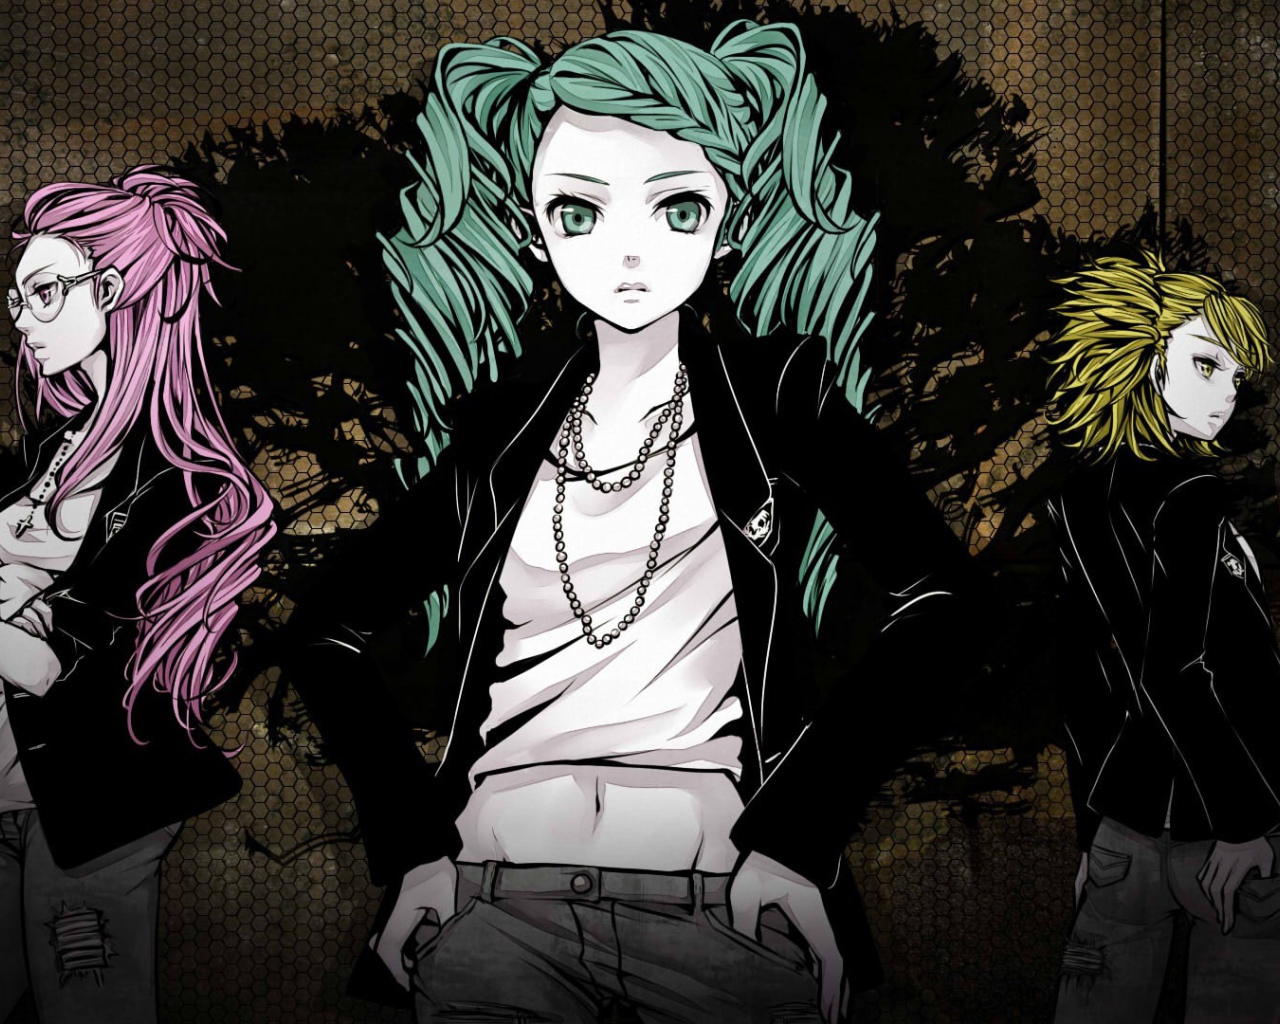 Три девушки аниме с волосами разного цвета